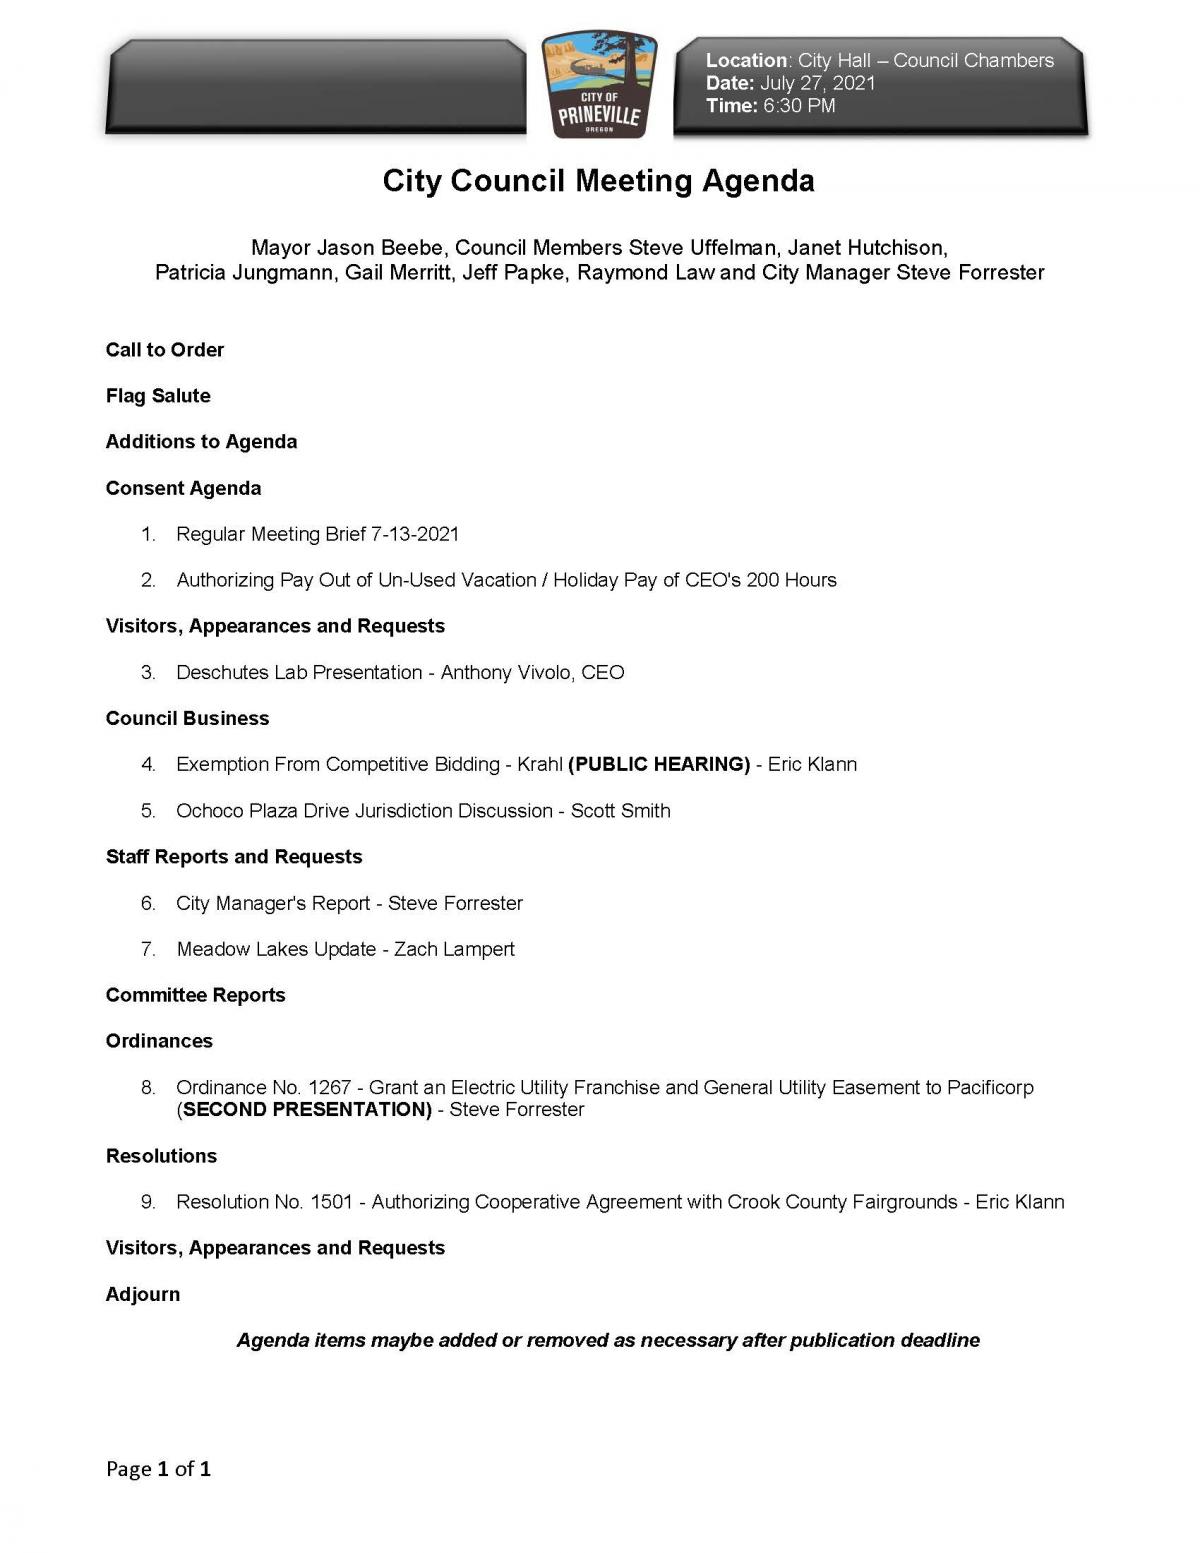 Council Agenda 7-27-2021